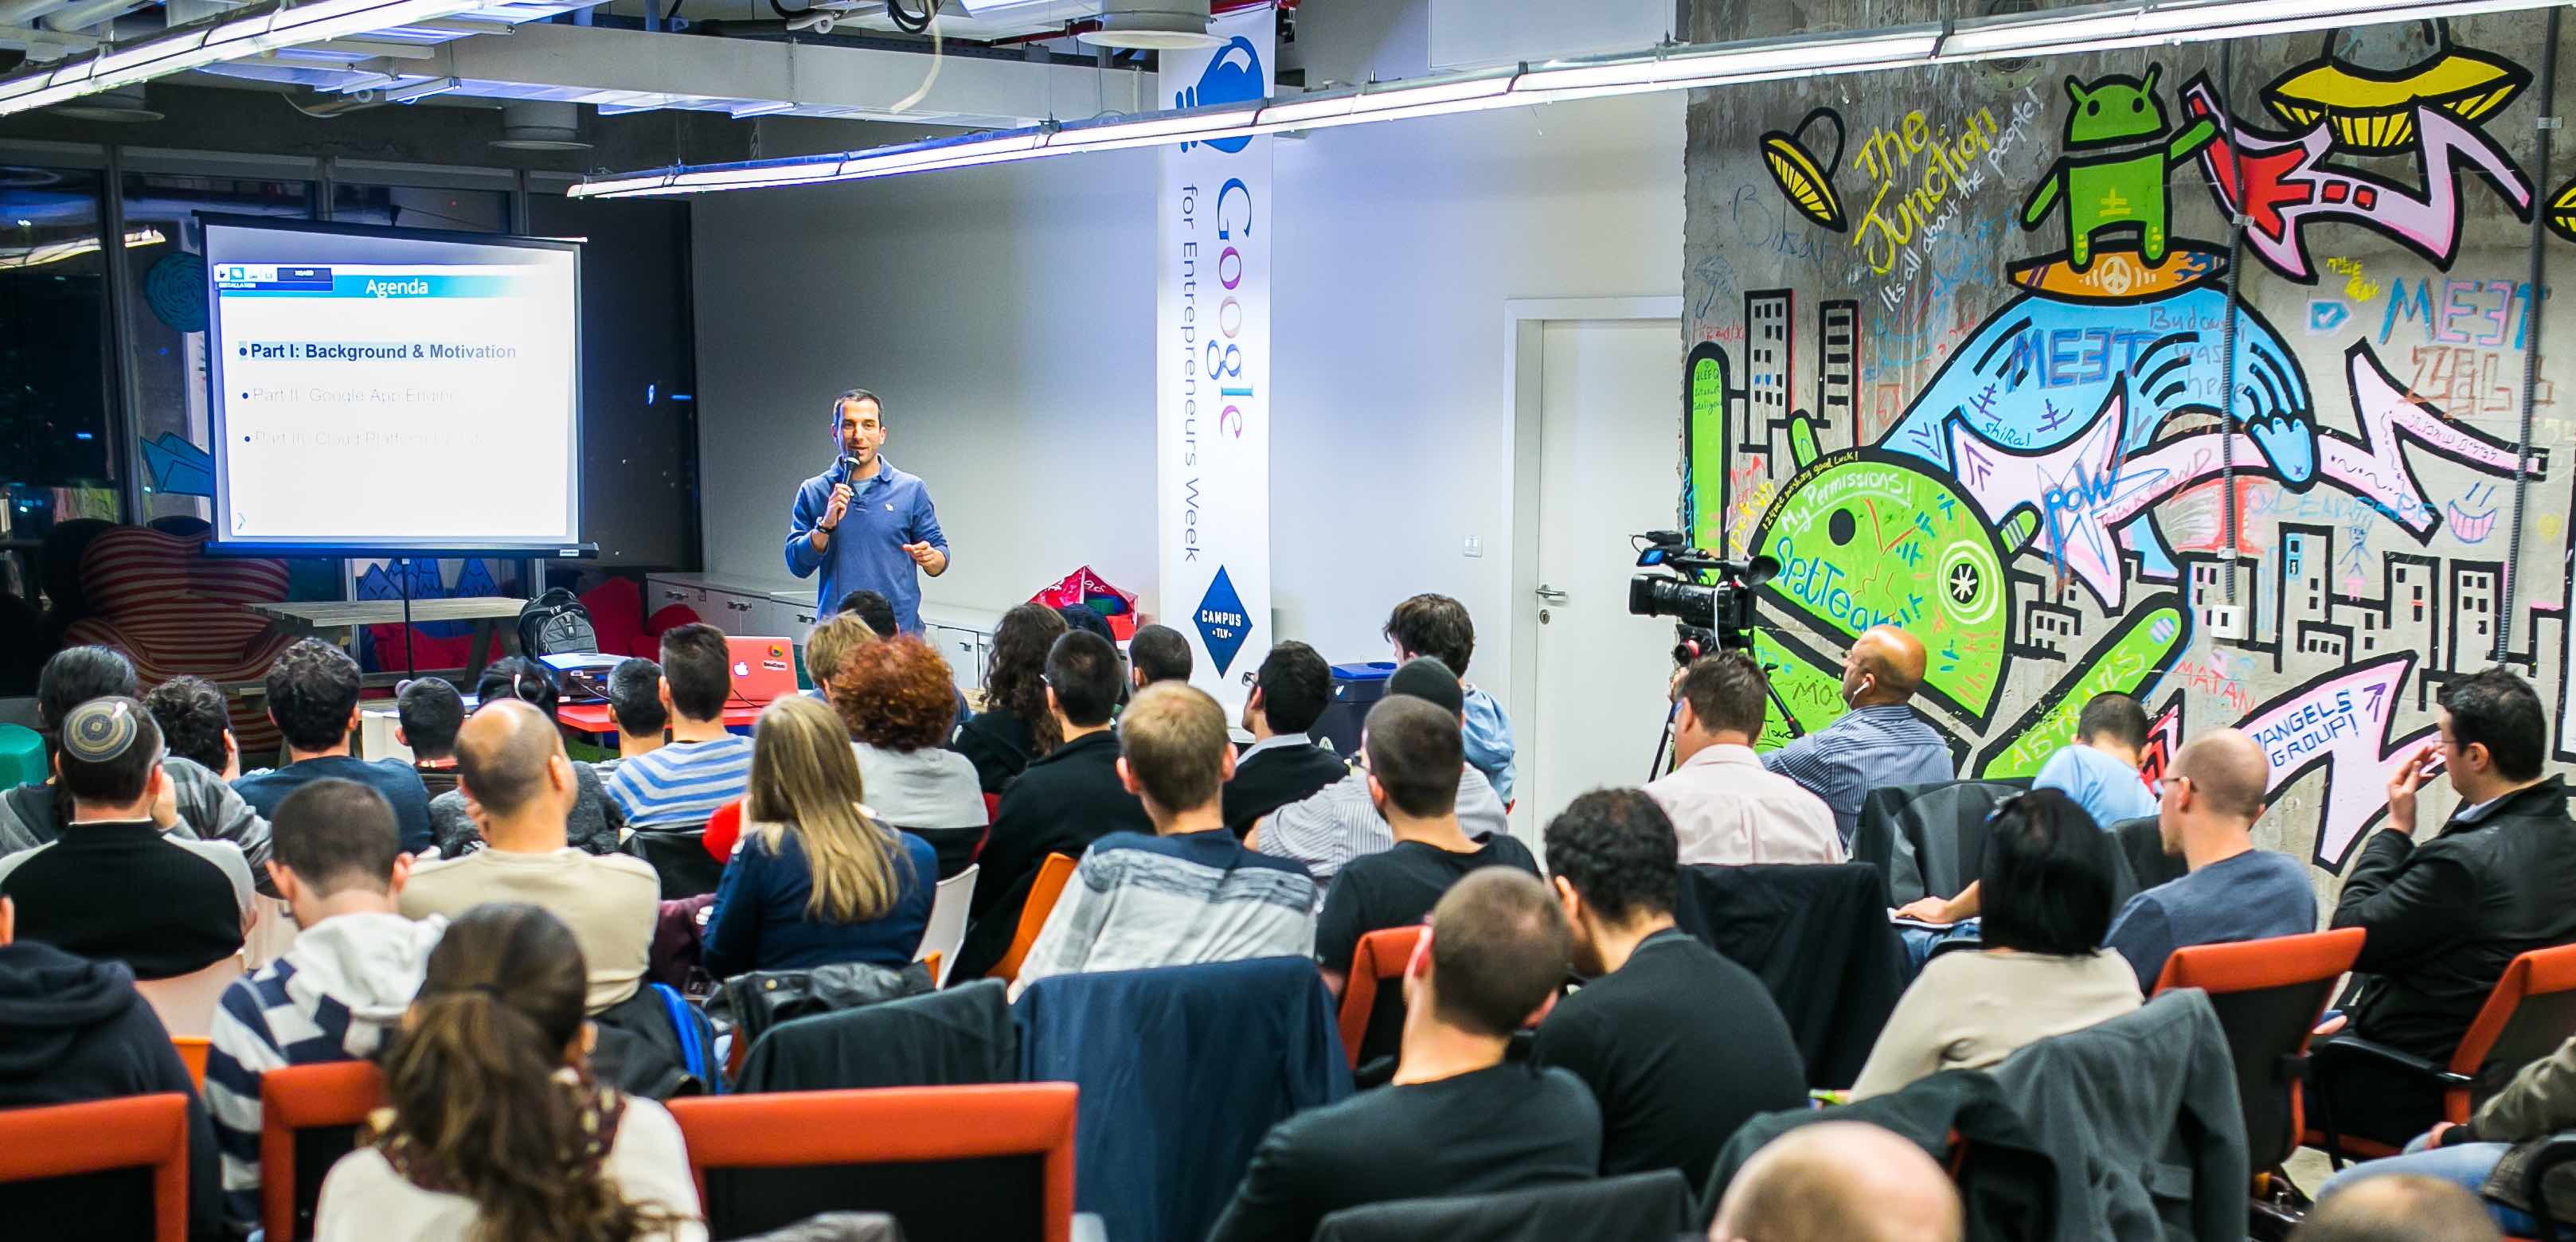 Ido talking at Google's Startup Campus TLV